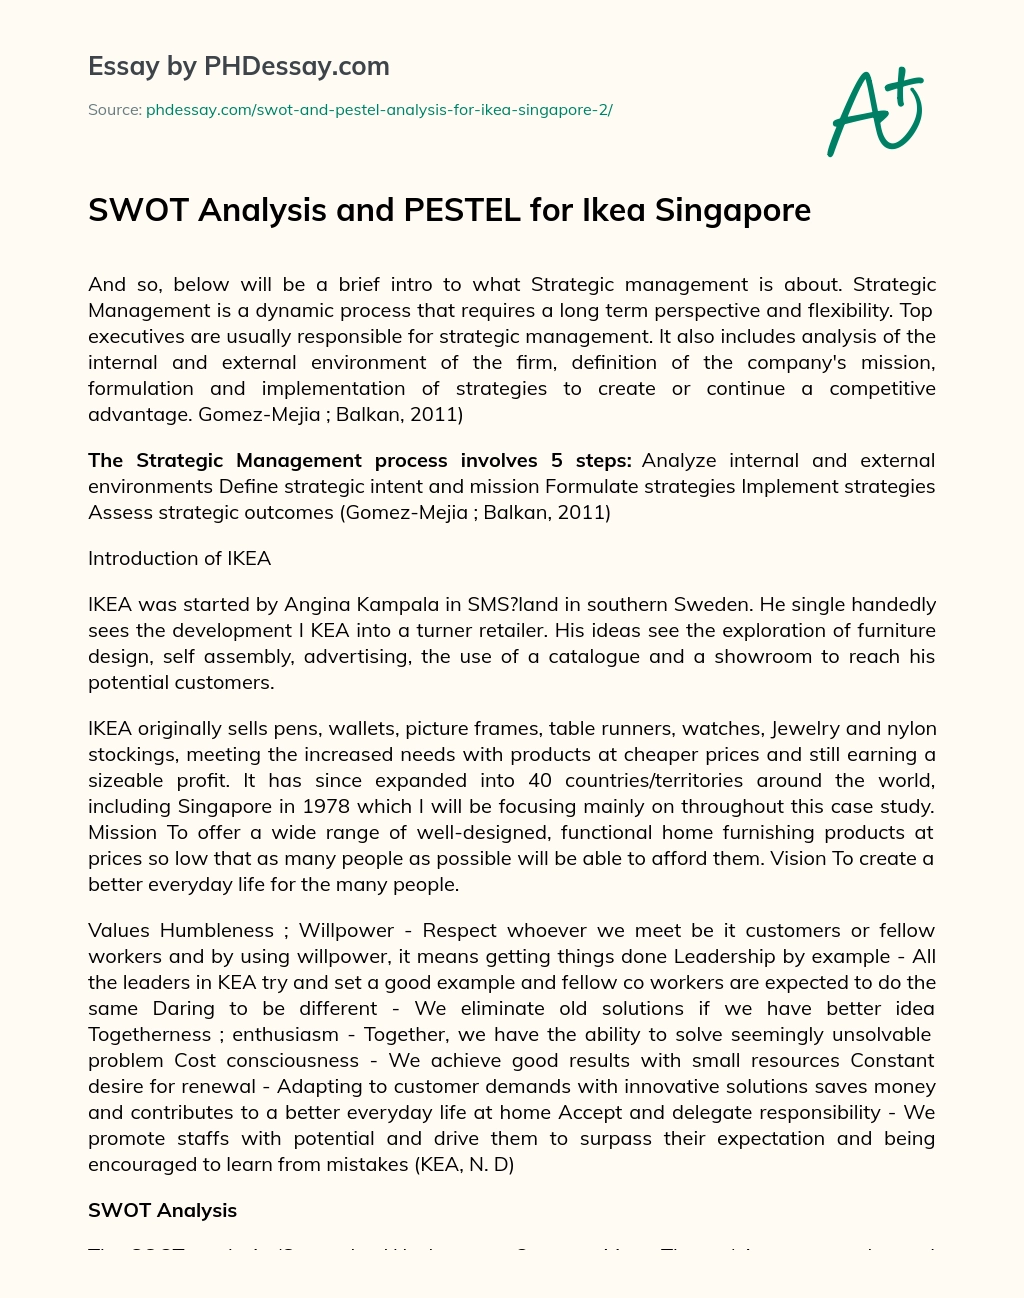 SWOT Analysis and PESTEL for Ikea Singapore essay